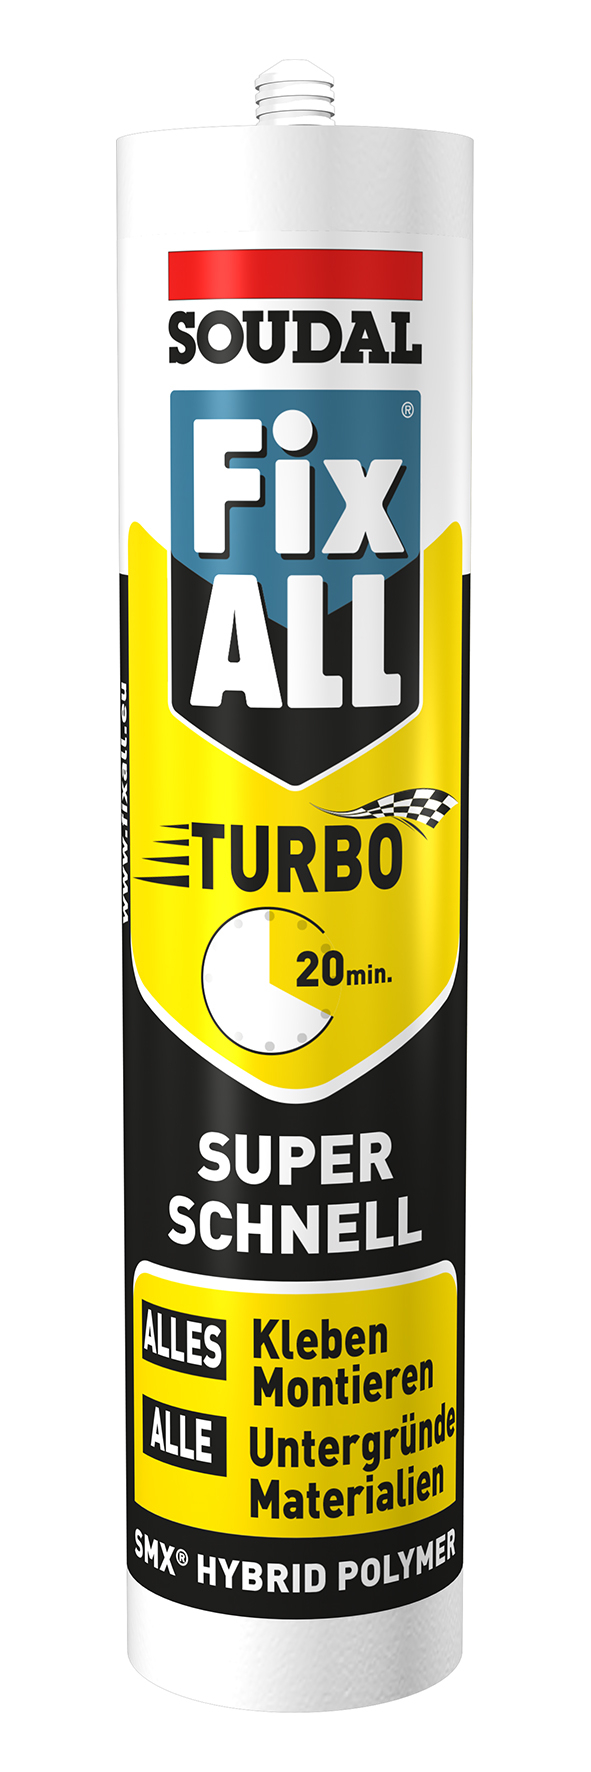 Soudal Fix All Turbo - 430 g weiss